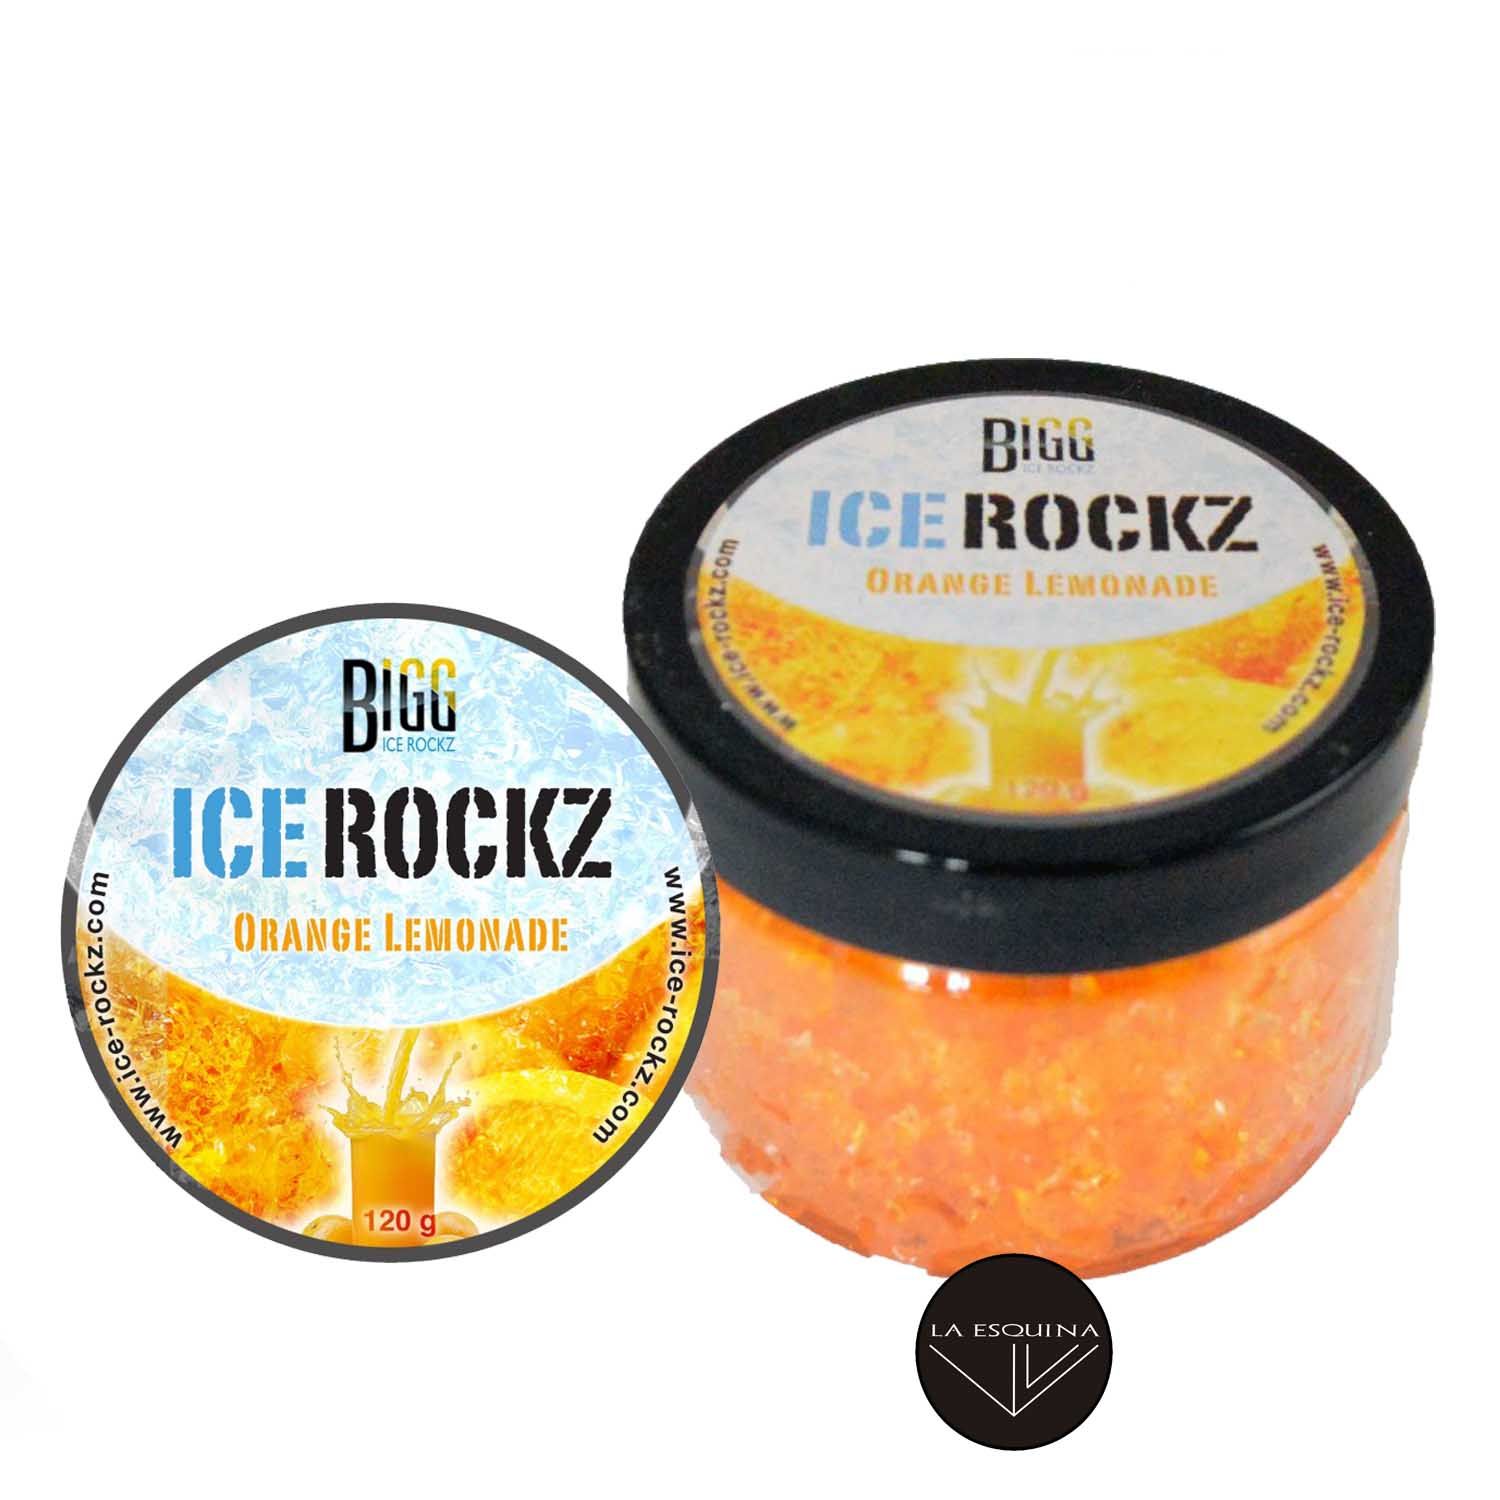 Gel Rock de Cachimba BIGG ICE ROCKZ – 120 g. – Orange Lemonade